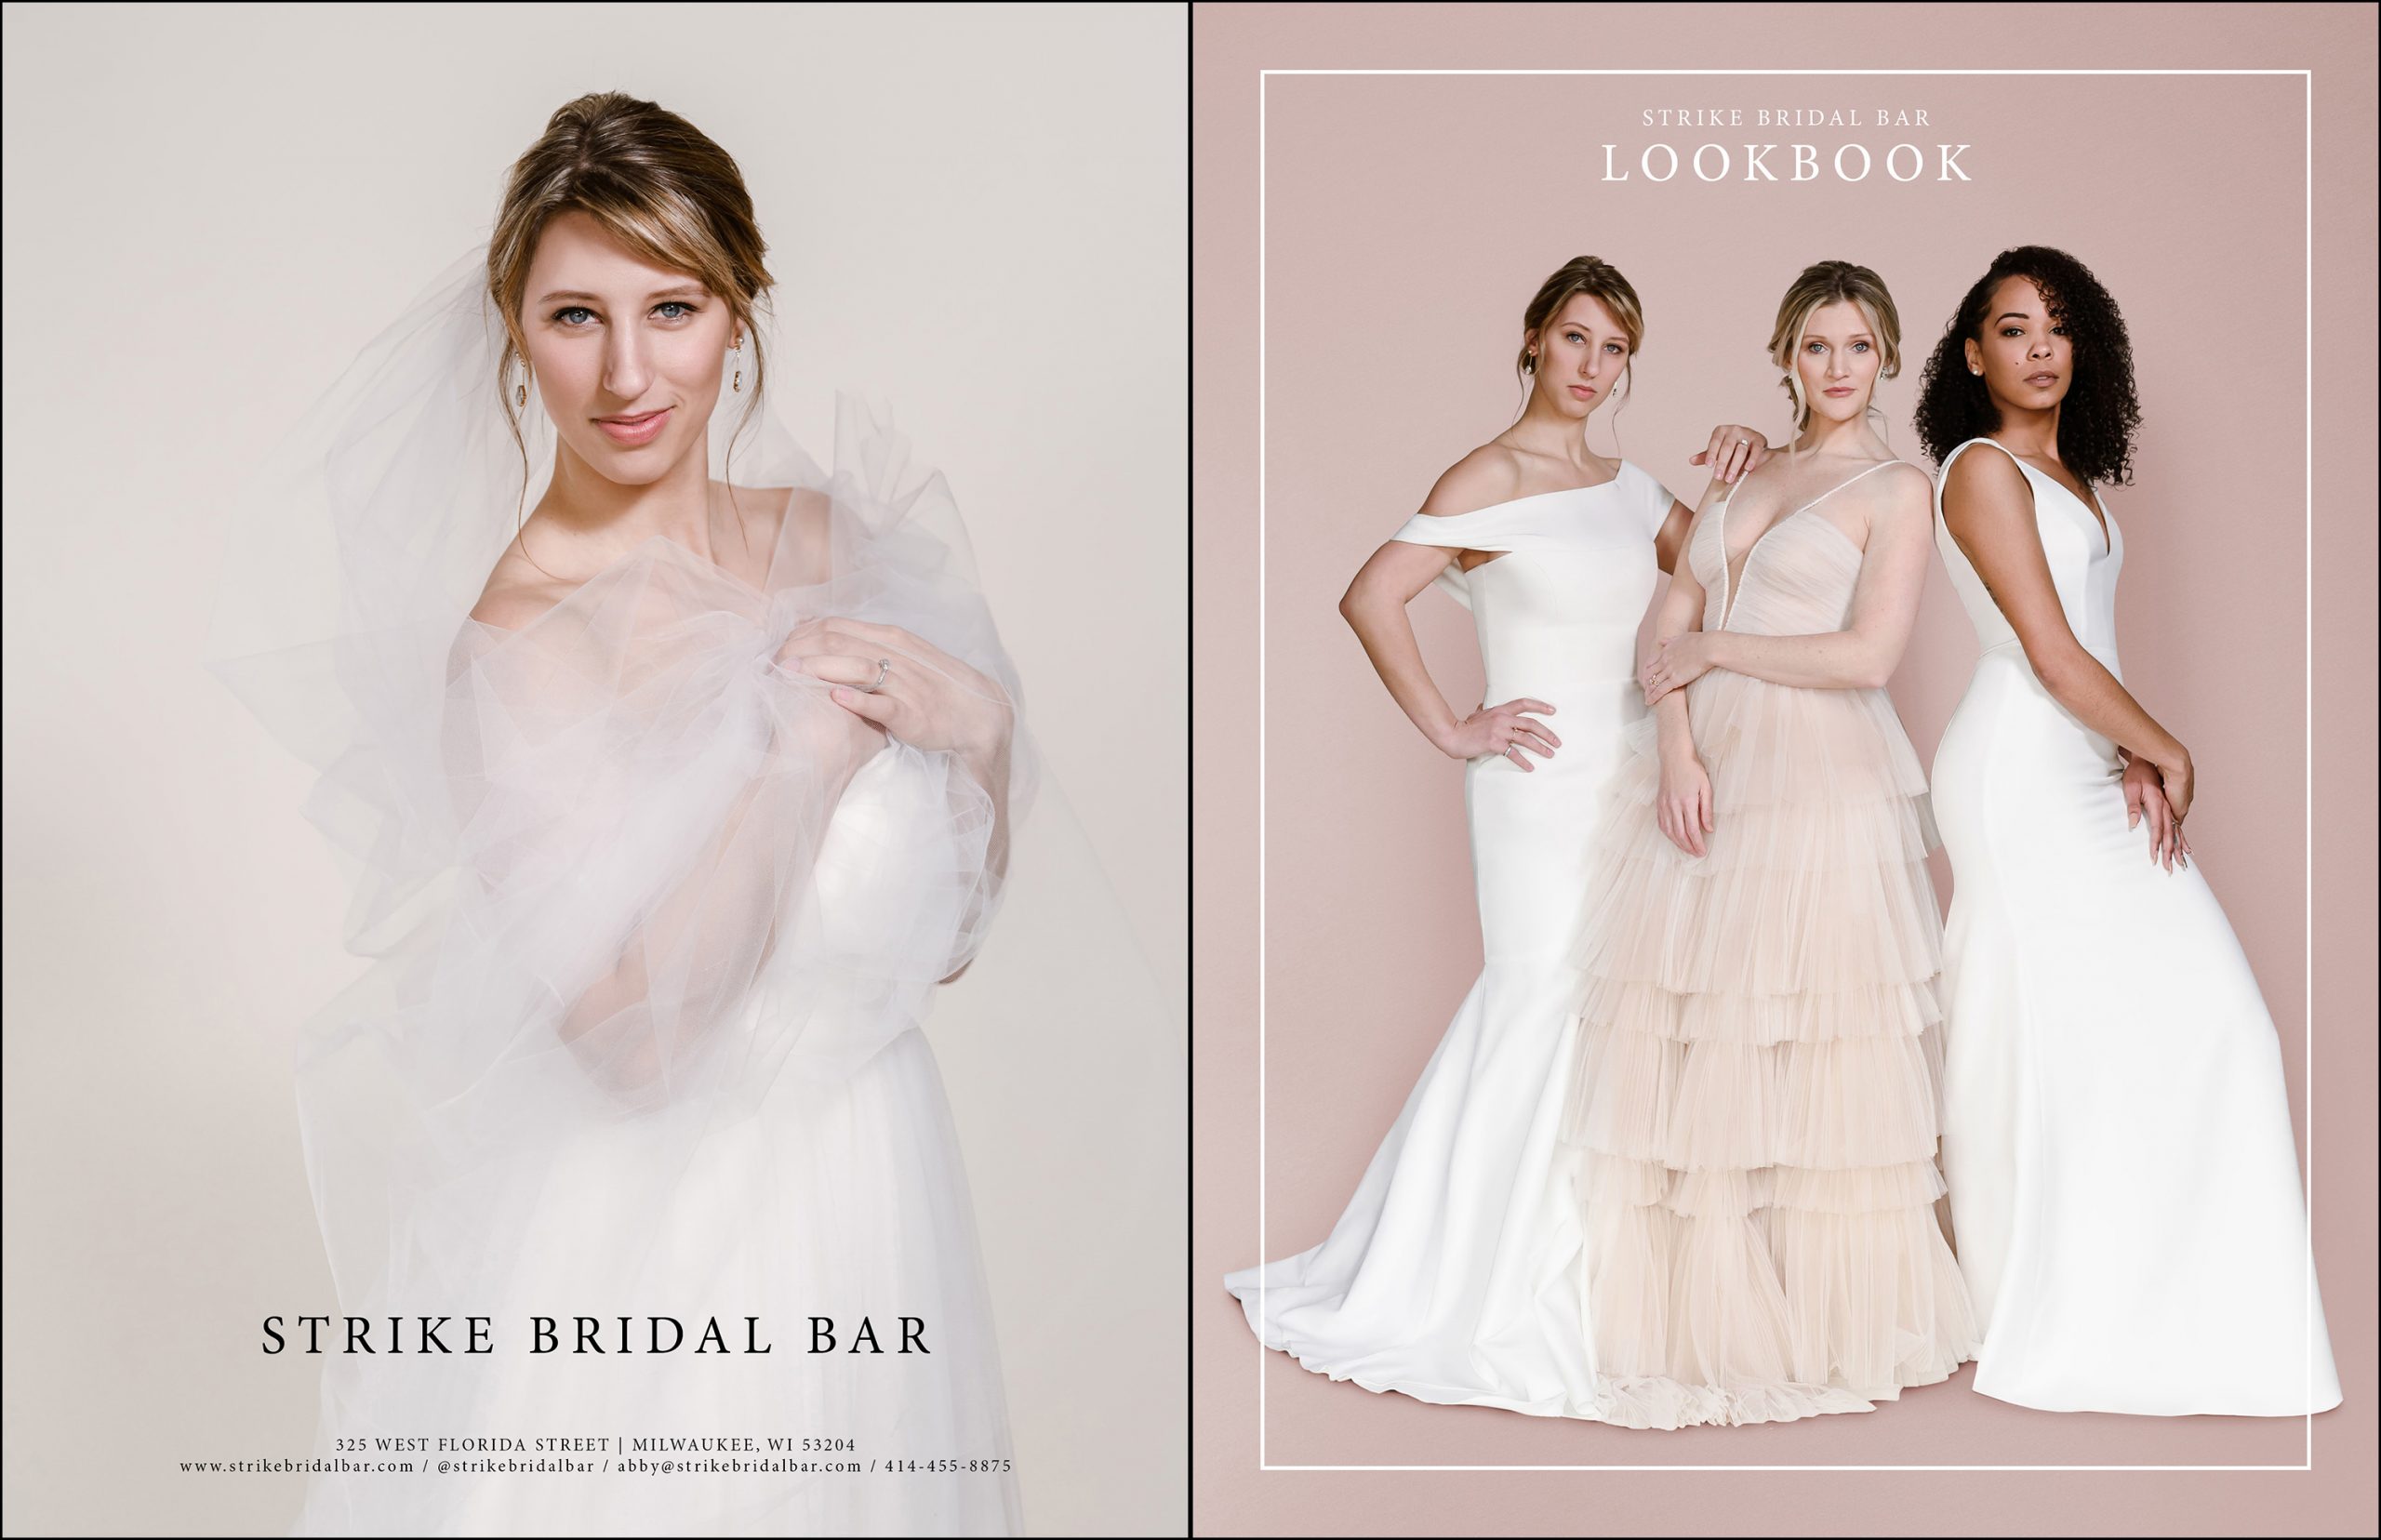 Strike Bridal Bar Lookbook by The Paper Elephant